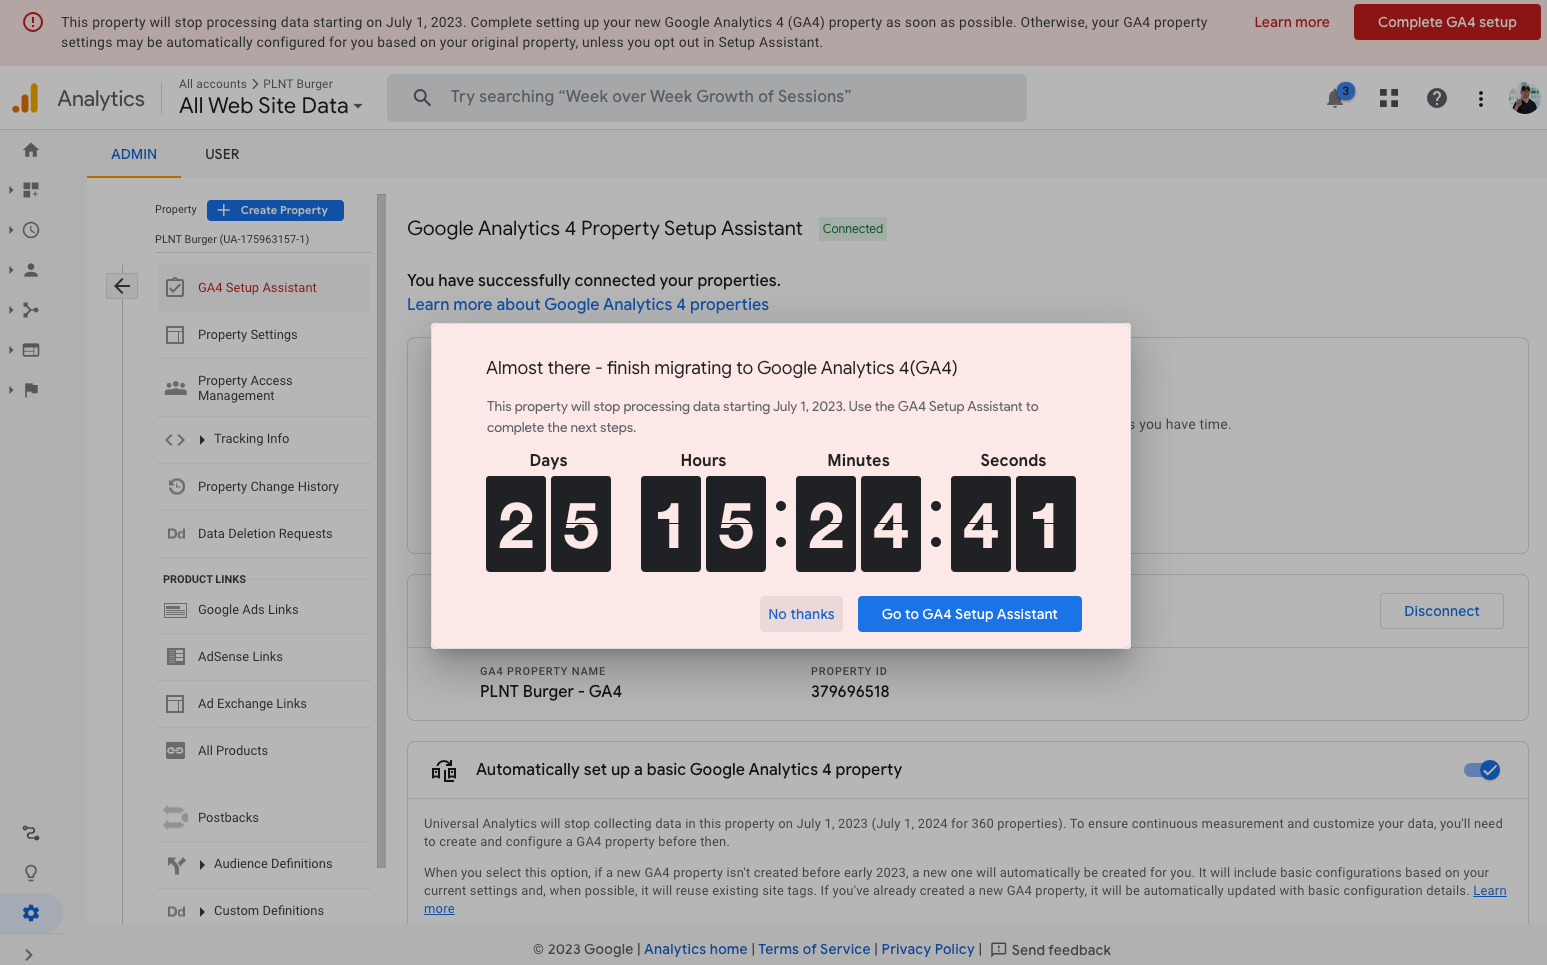 Countdown on Universal Analytics until the transition to Google Analytics 4